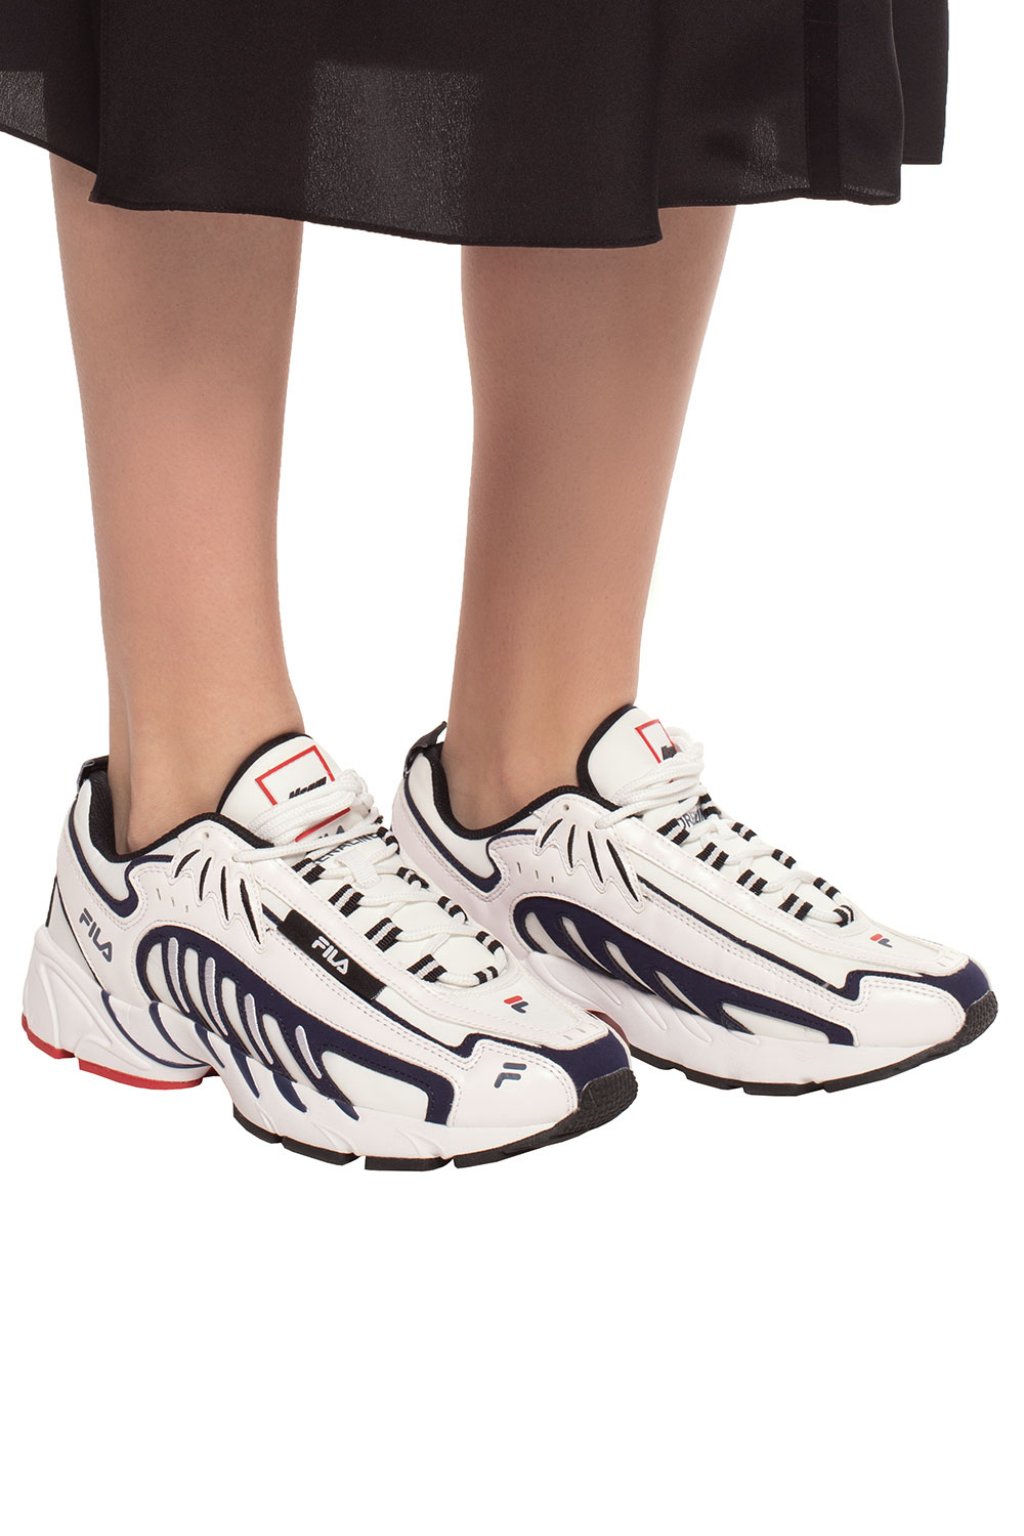 MSGM Ladies X Fila Sneakers, Brand Size 37 (US Size 6) 